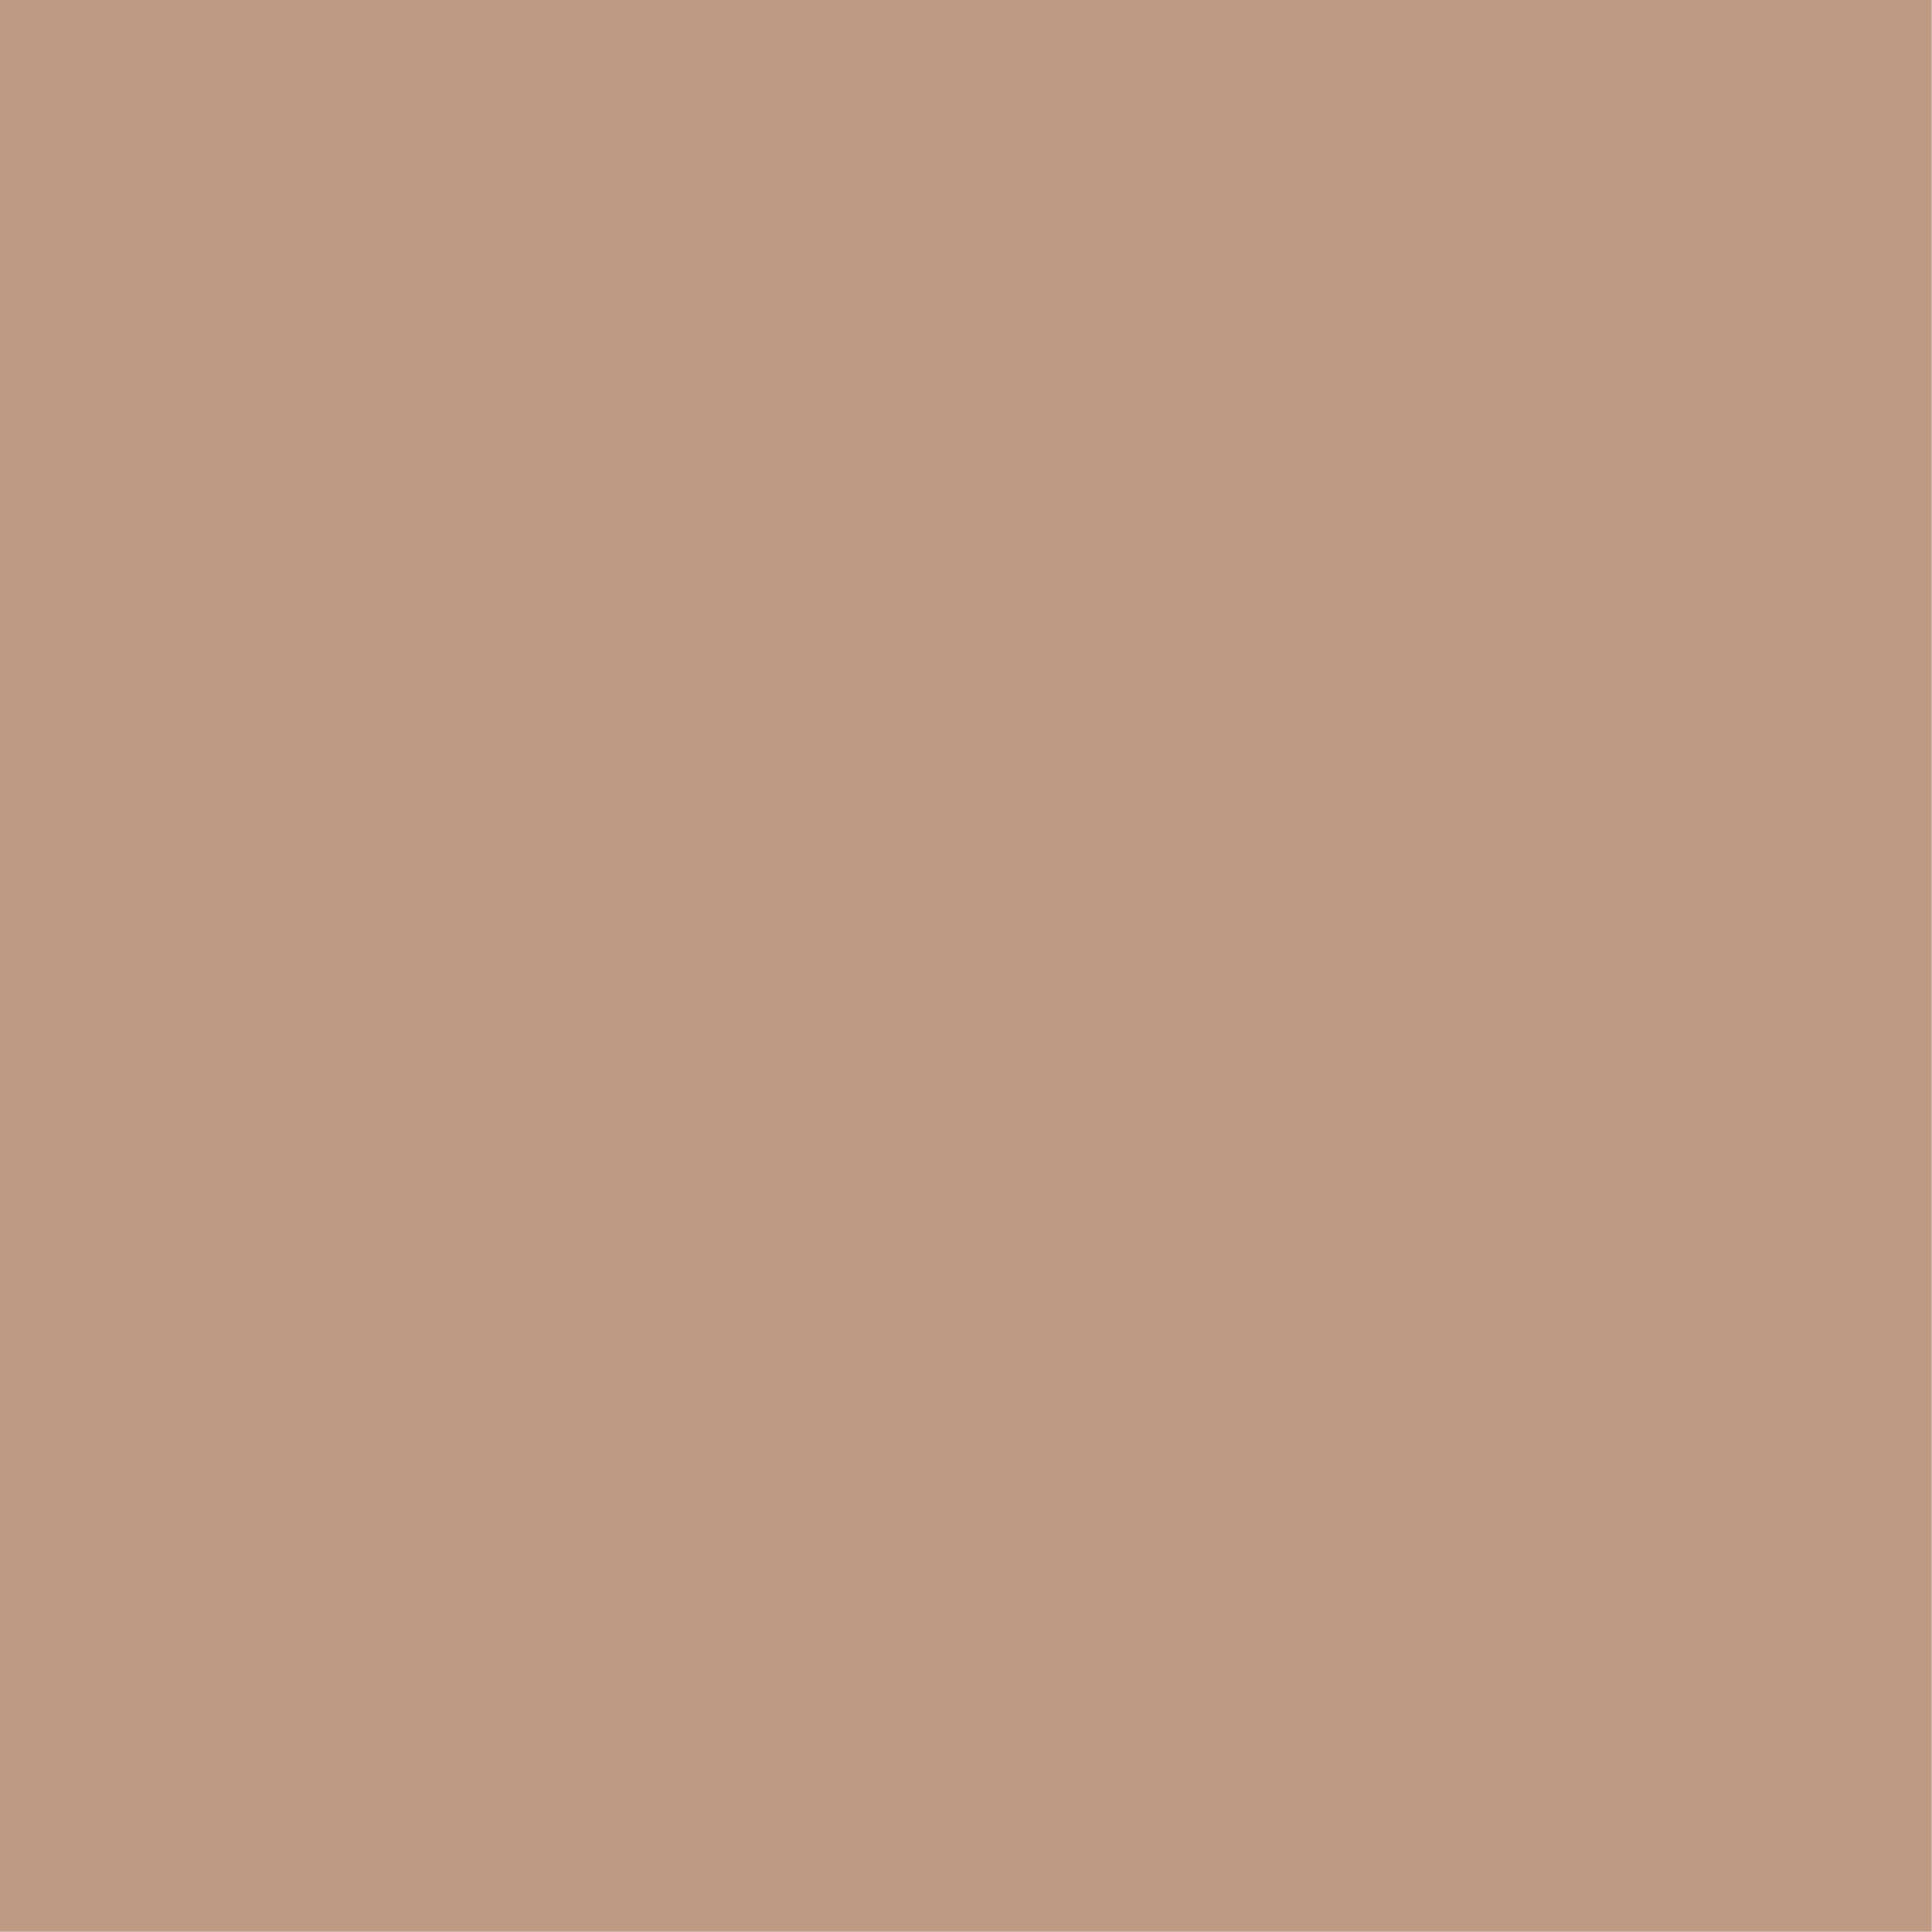 Pintura interior mate reveton pro 15l 3020-y60r marrón rojizo empolvado